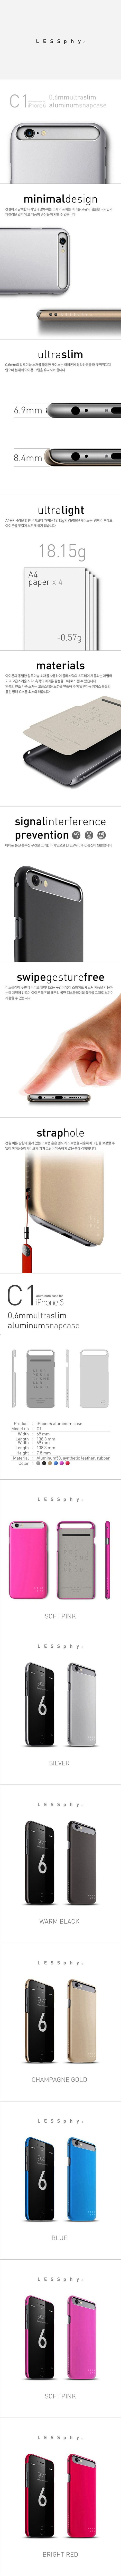 iPhone6 4.7 Lessphy ...